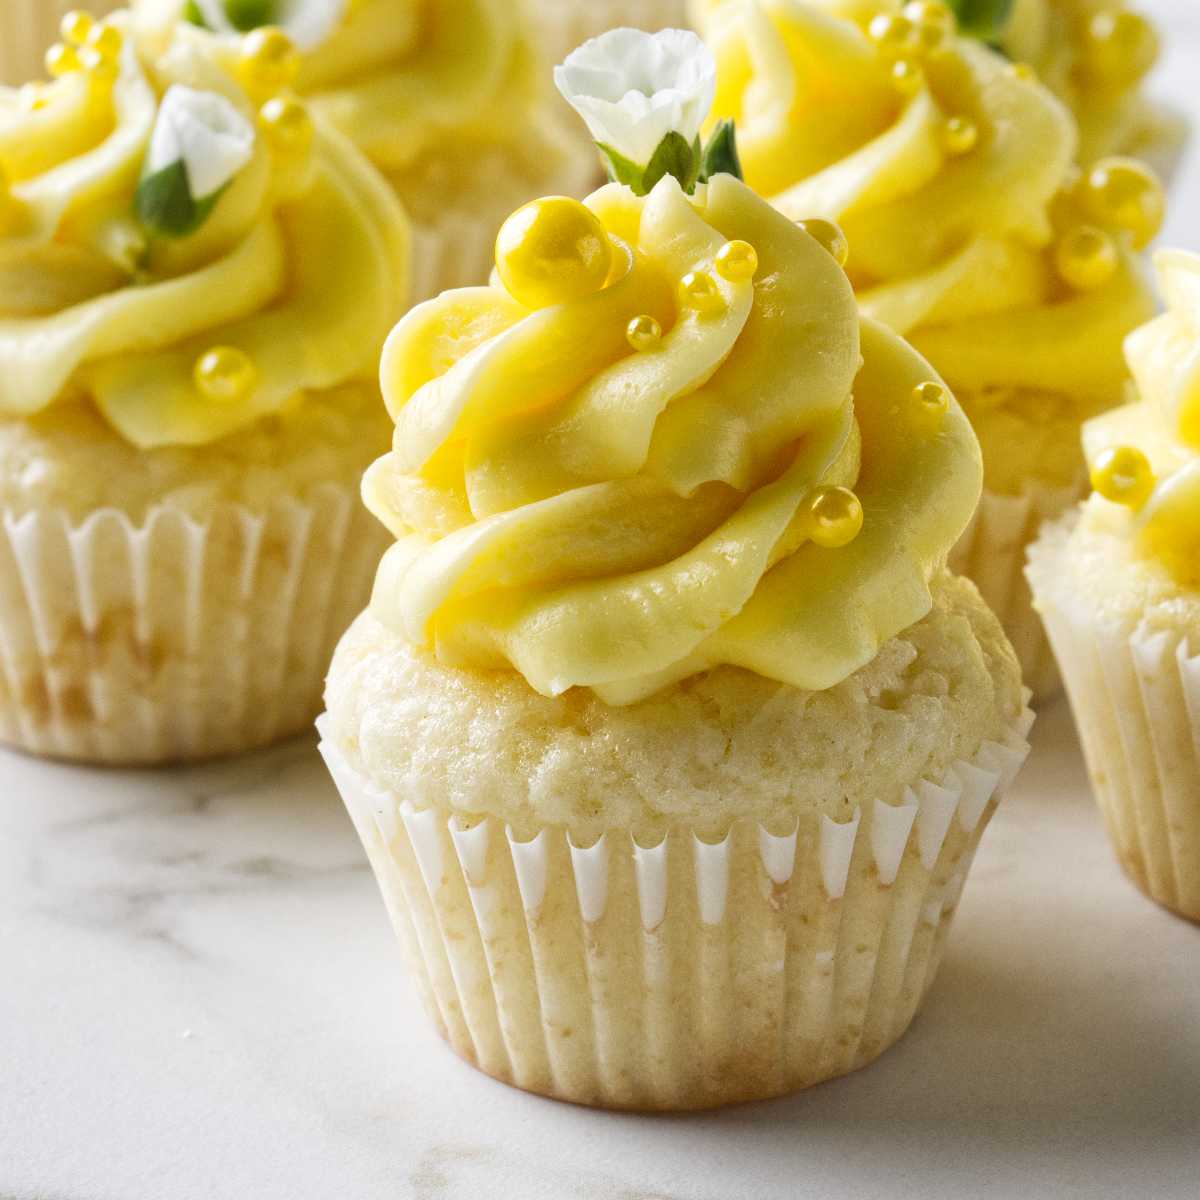 Several min lemon cupcakes topped with a swirl of lemon condensed milk buttercream.